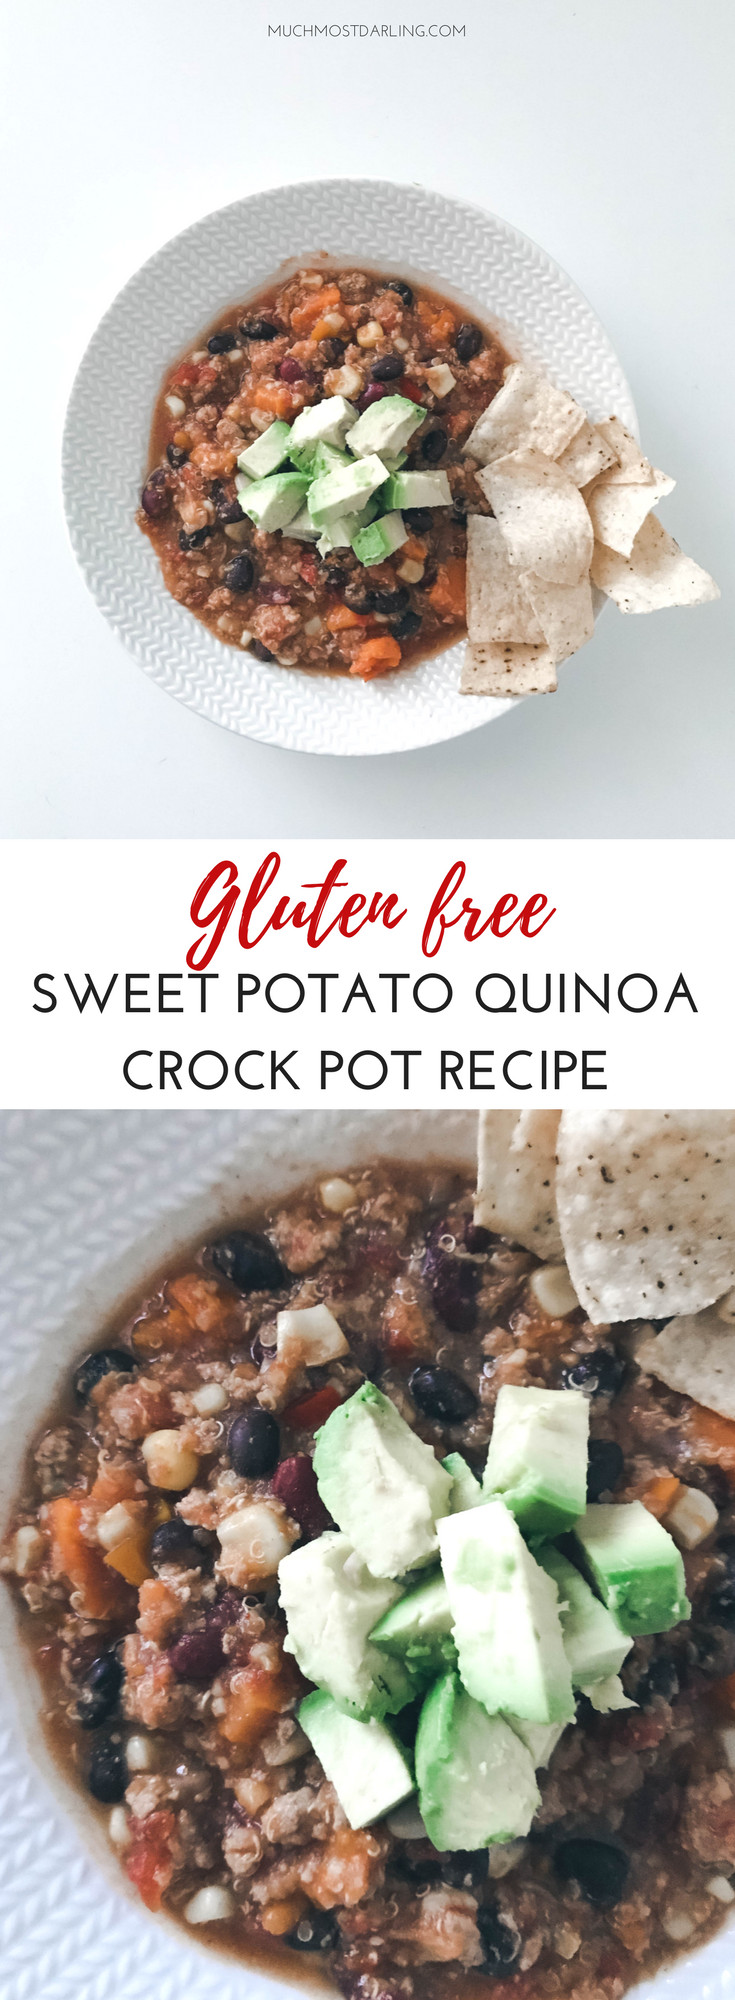 Easy Gluten Free Crockpot Recipes
 Gluten Free Crockpot Recipe Sweet Potato & Ground Turkey